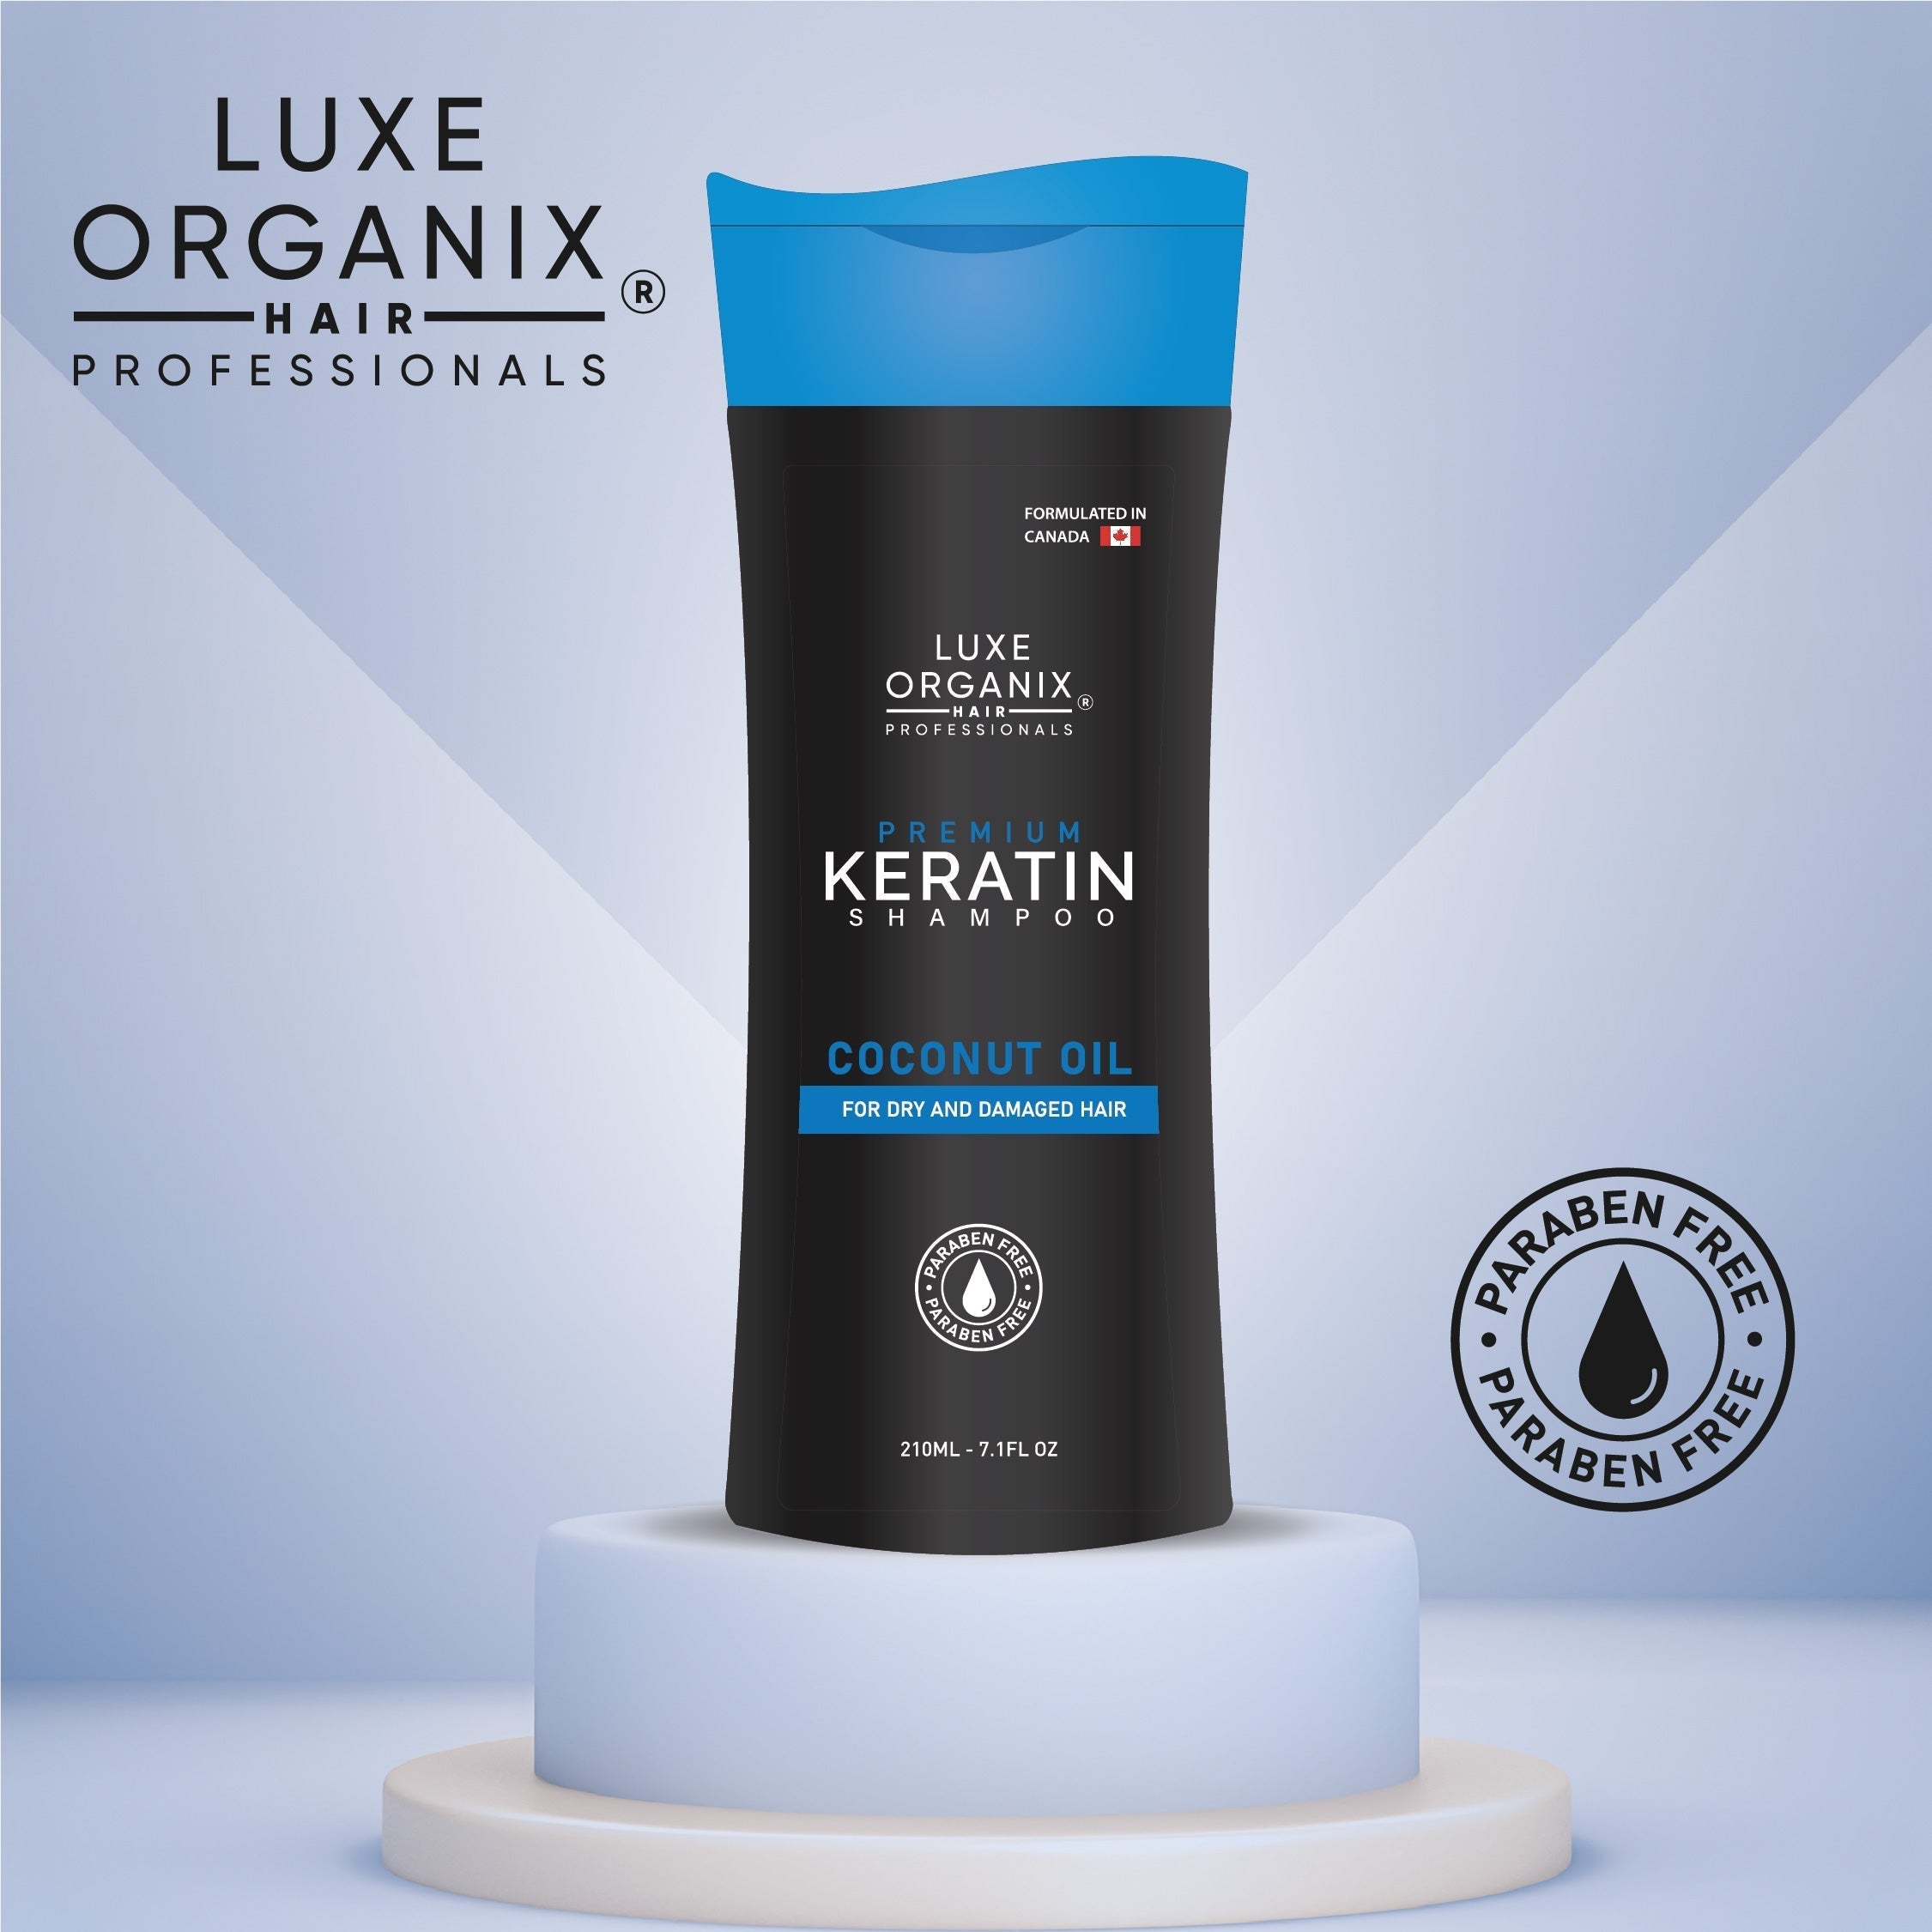 Premium Keratin Shampoo 210ml (Virgin Coconut Oil)